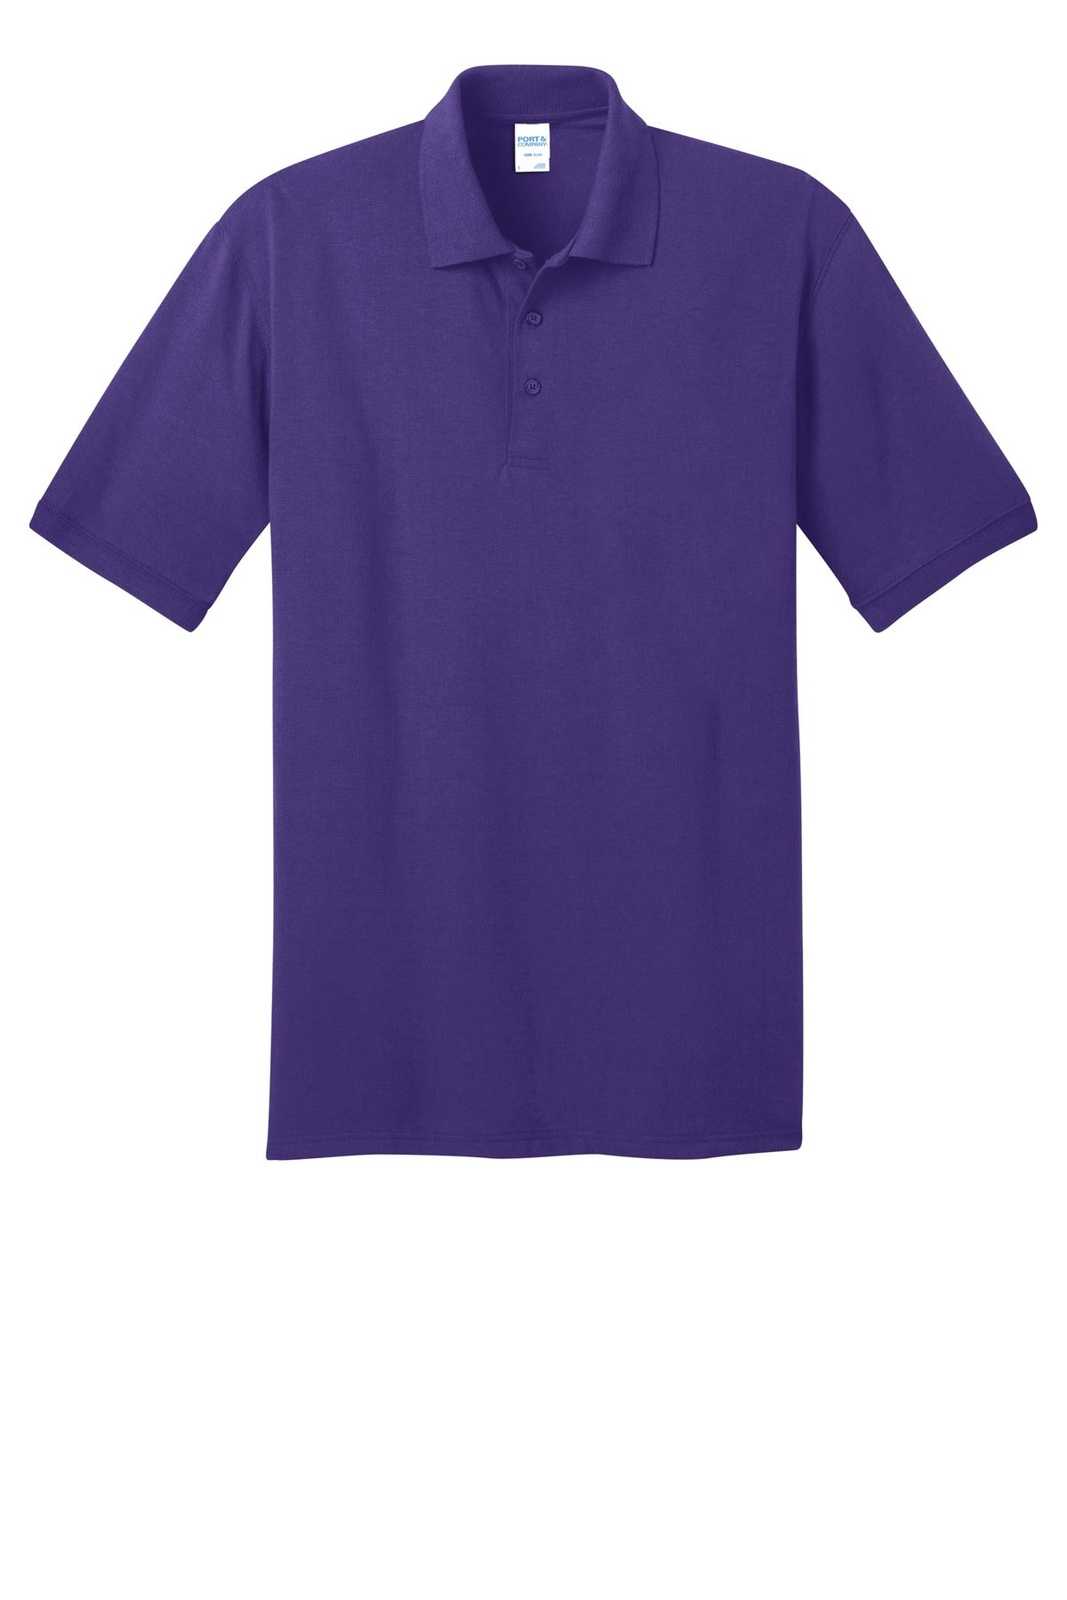 Port &amp; Company KP55 Core Blend Jersey Knit Polo - Purple - HIT a Double - 5